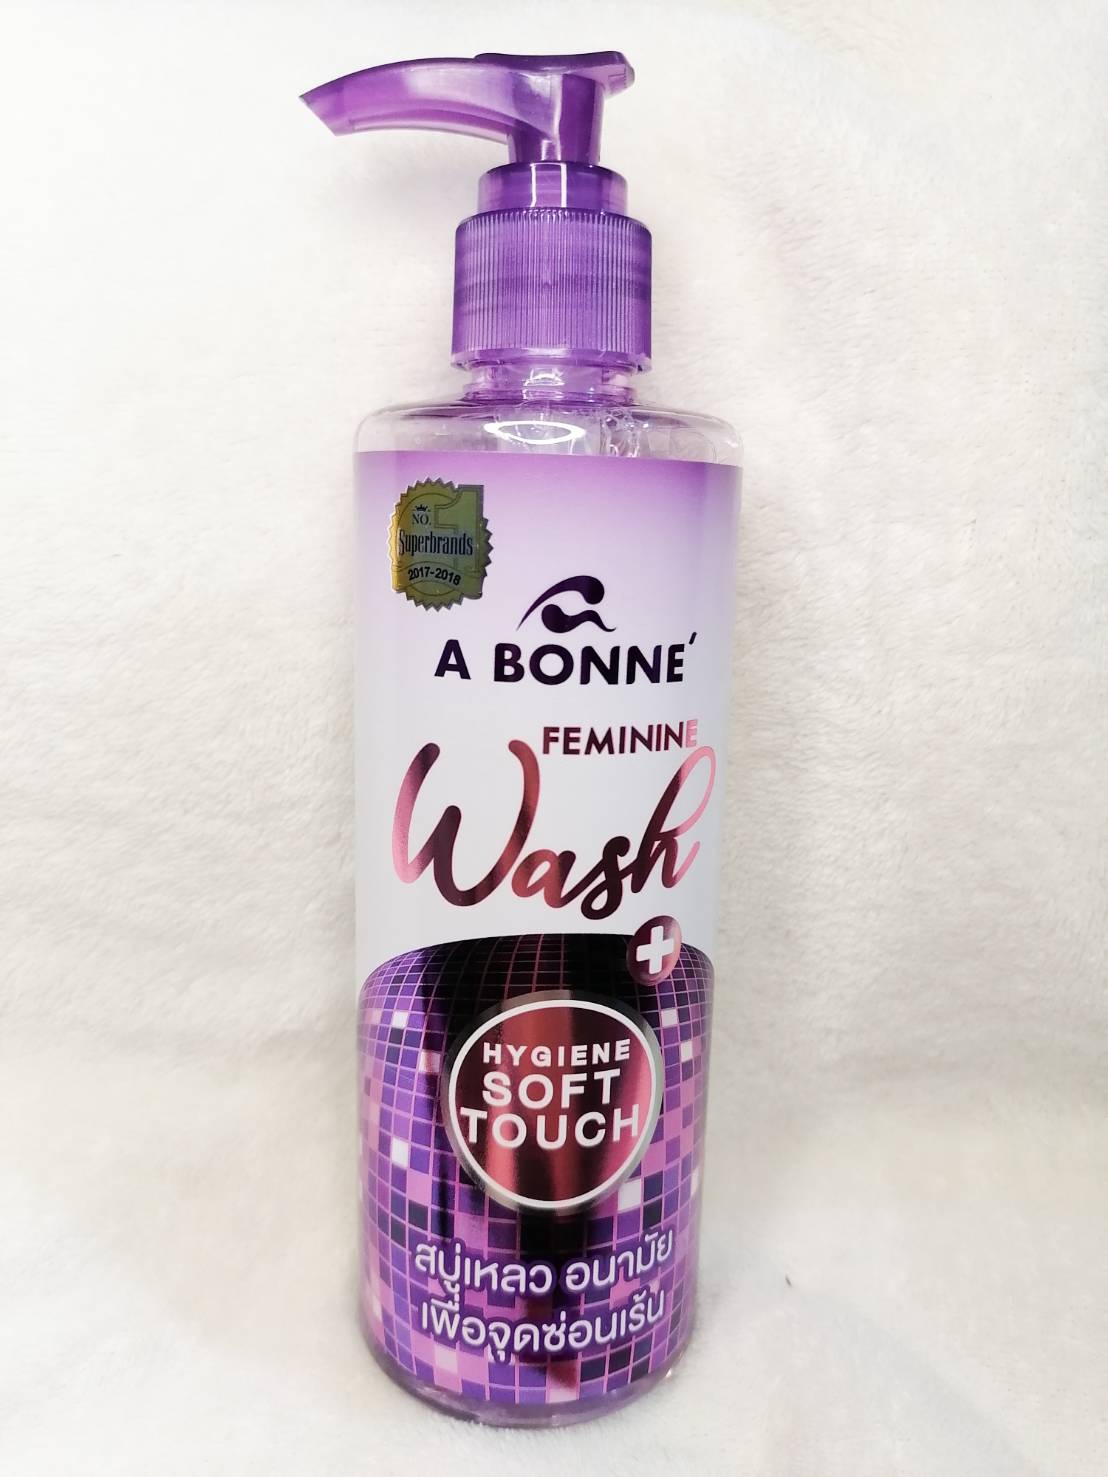 A Bonne ' Feminine Wash Hygiene Soft Touch 250ml